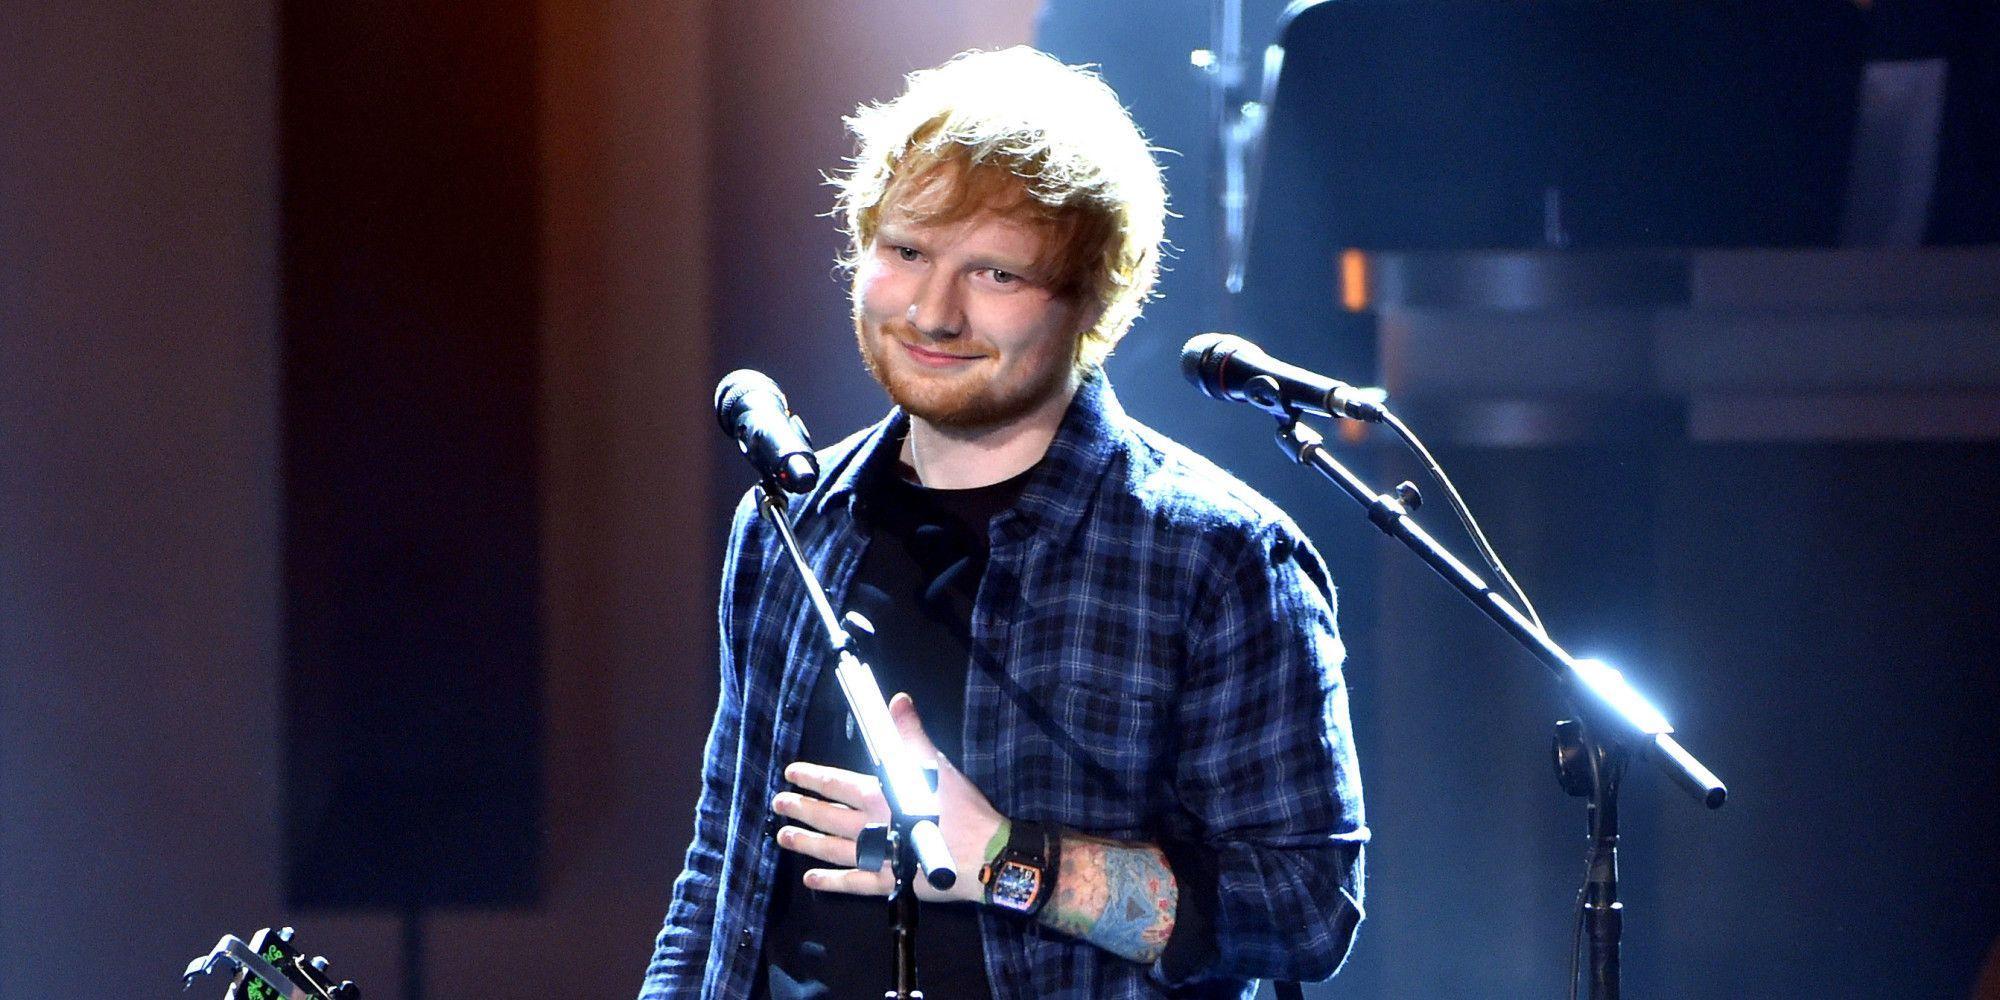 Ed Sheeran wallpaper HD background download Facebook Covers